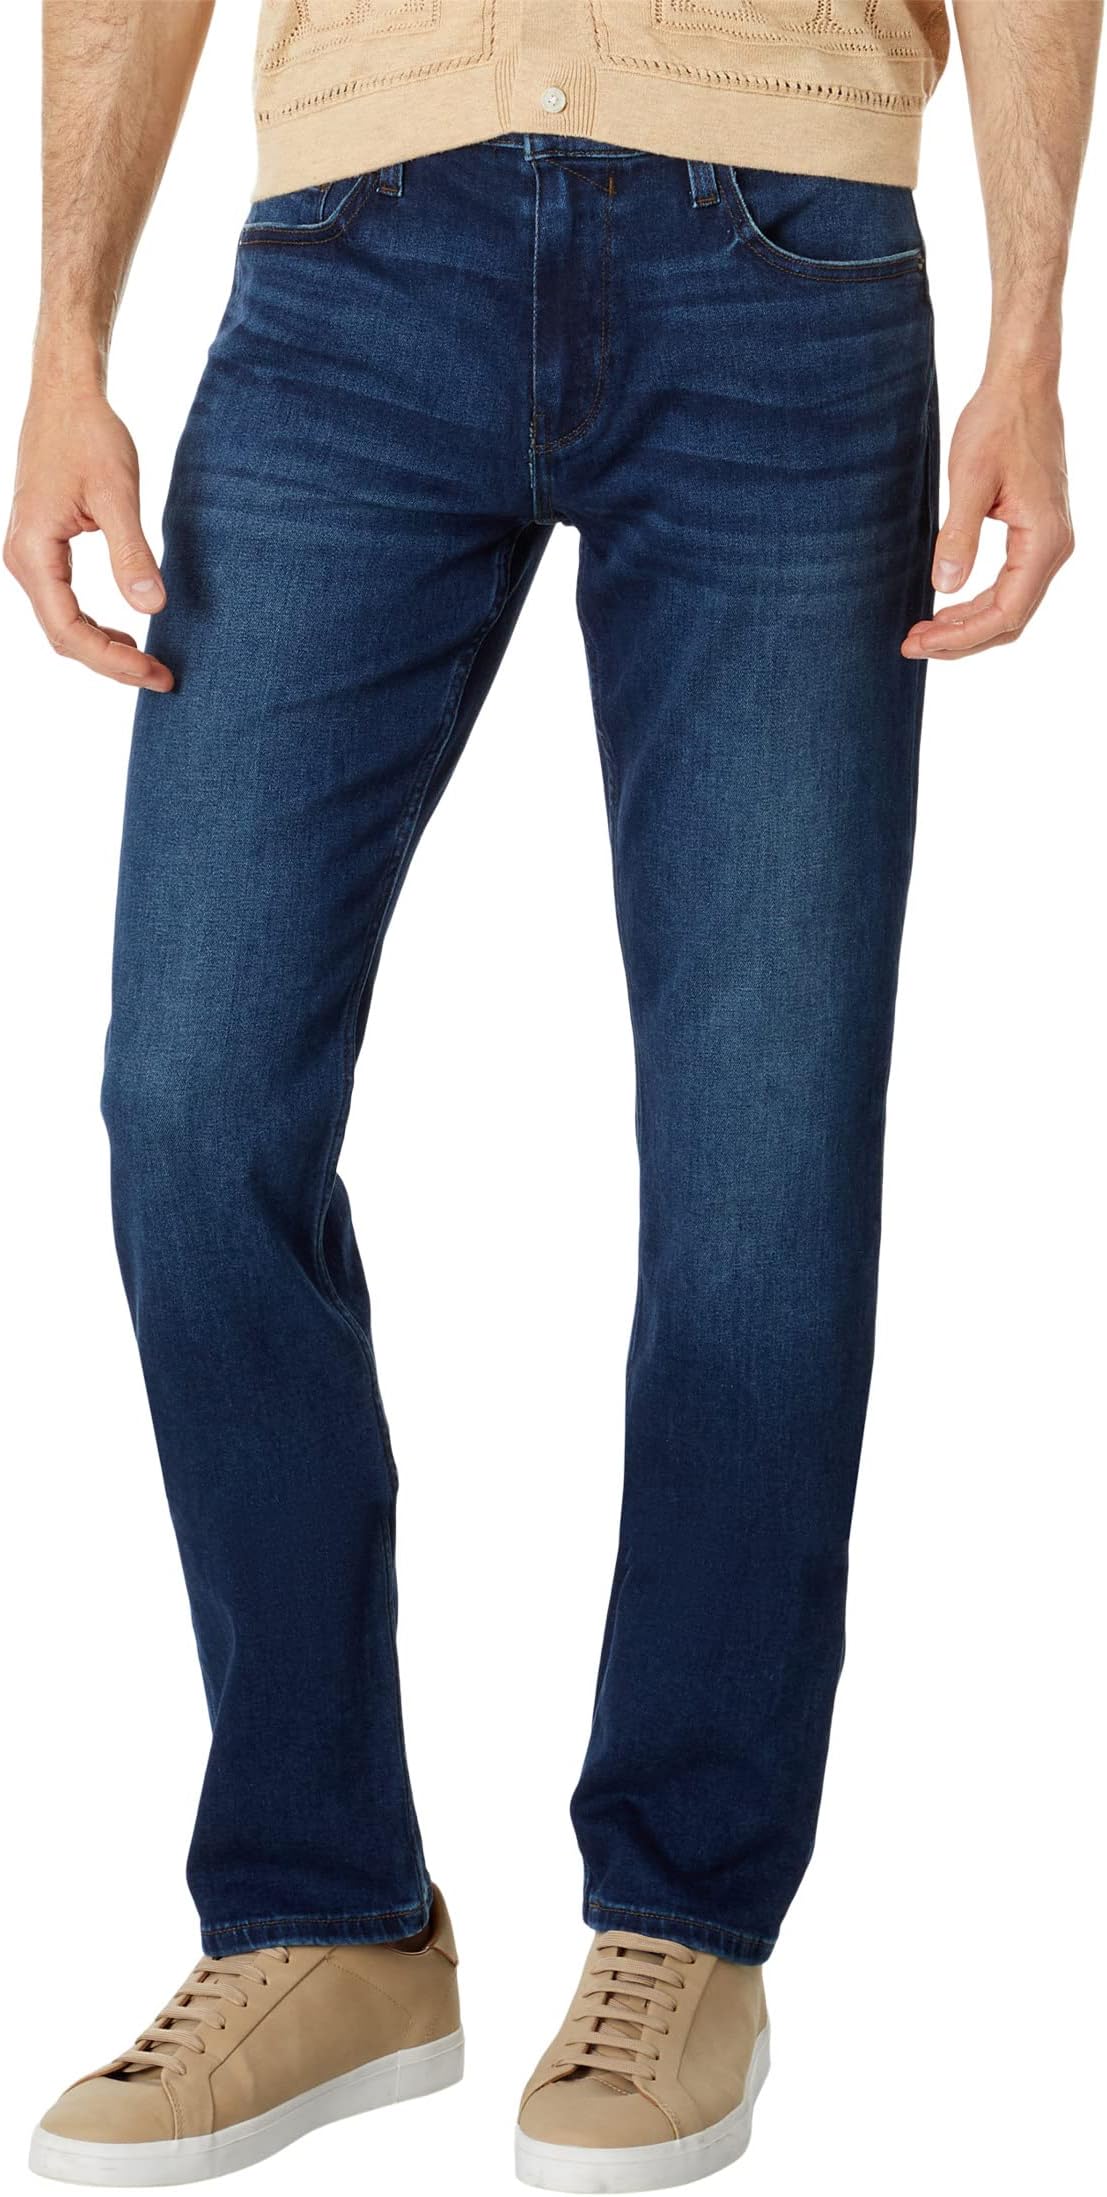 Джинсы Federal Transcend Vintage Slim Straight Fit Jeans in Hartweg Paige, цвет Hartweg джинсы federal transcend vintage slim straight fit jeans in hartweg paige цвет hartweg